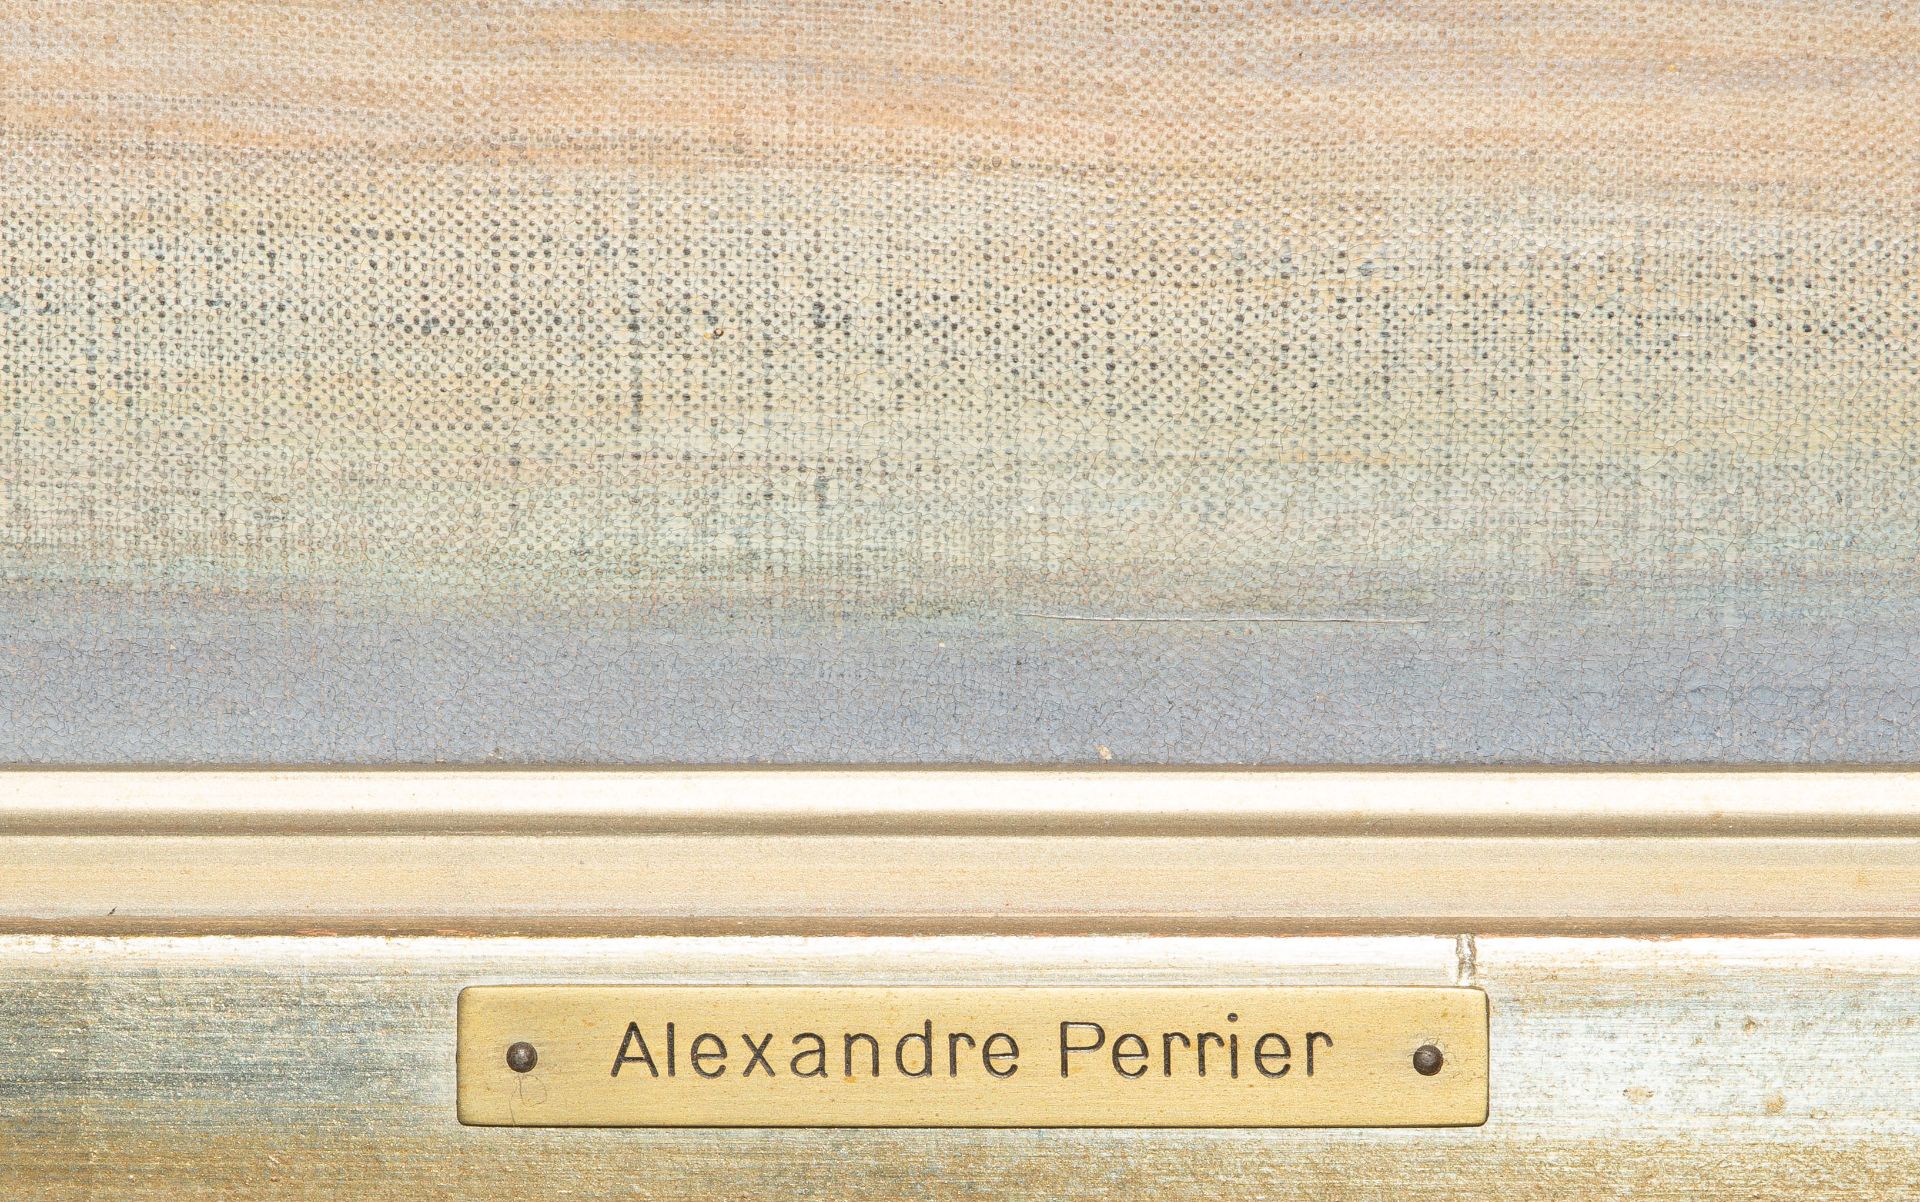 Perrier, Alexandre  - Bild 7 aus 12